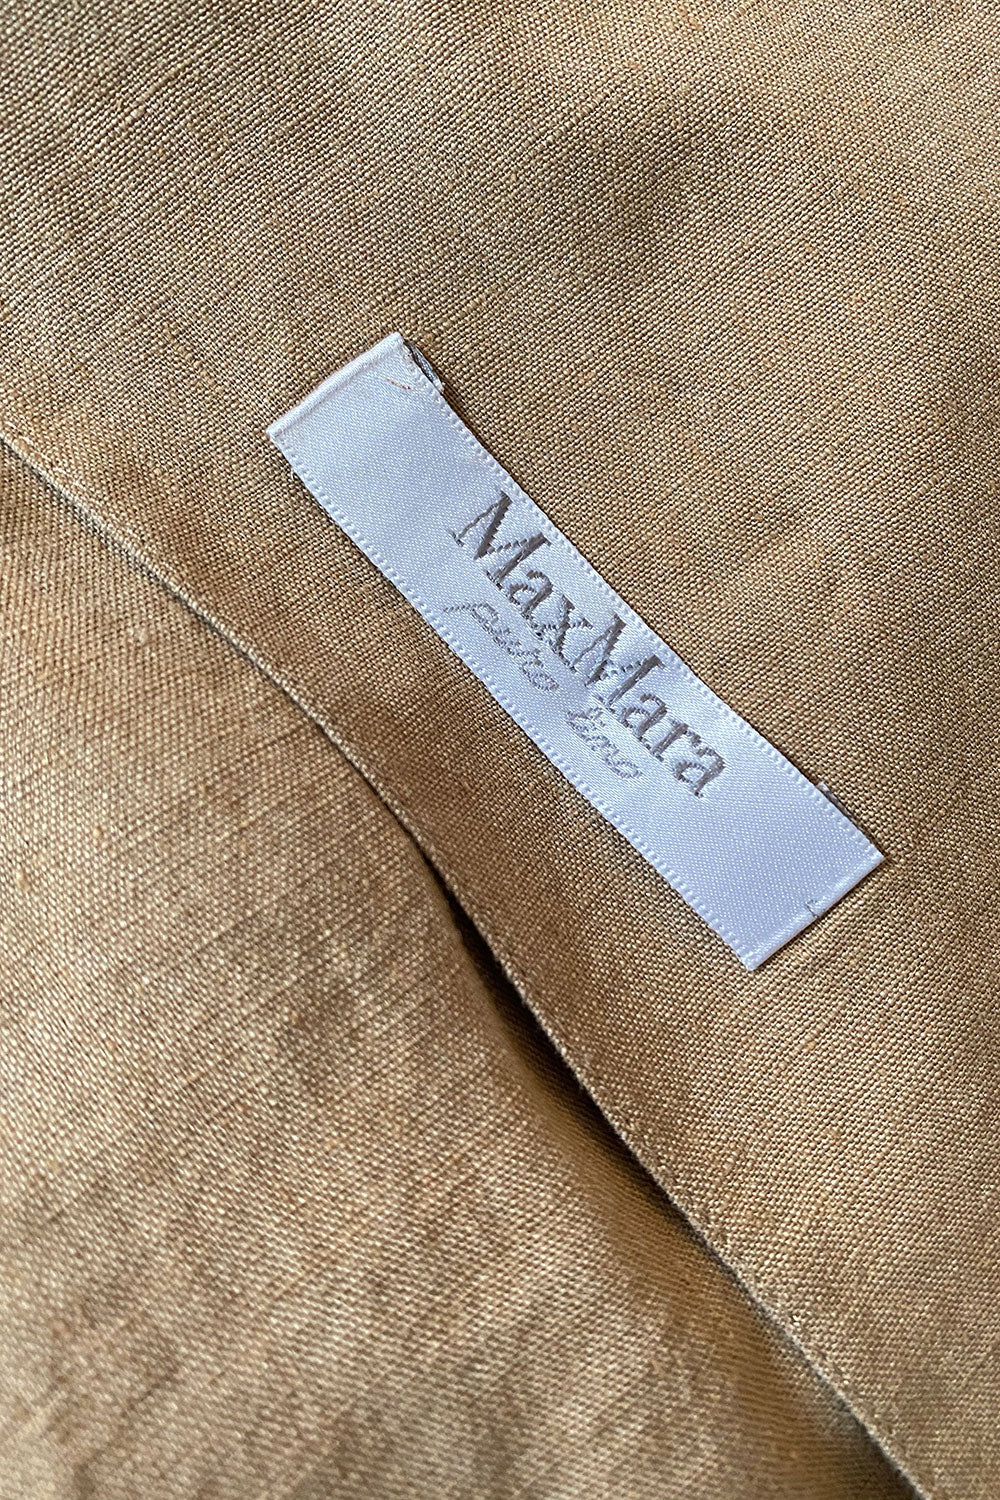 Max Mara Longline Linen Shirt / Jacket Size 10-12